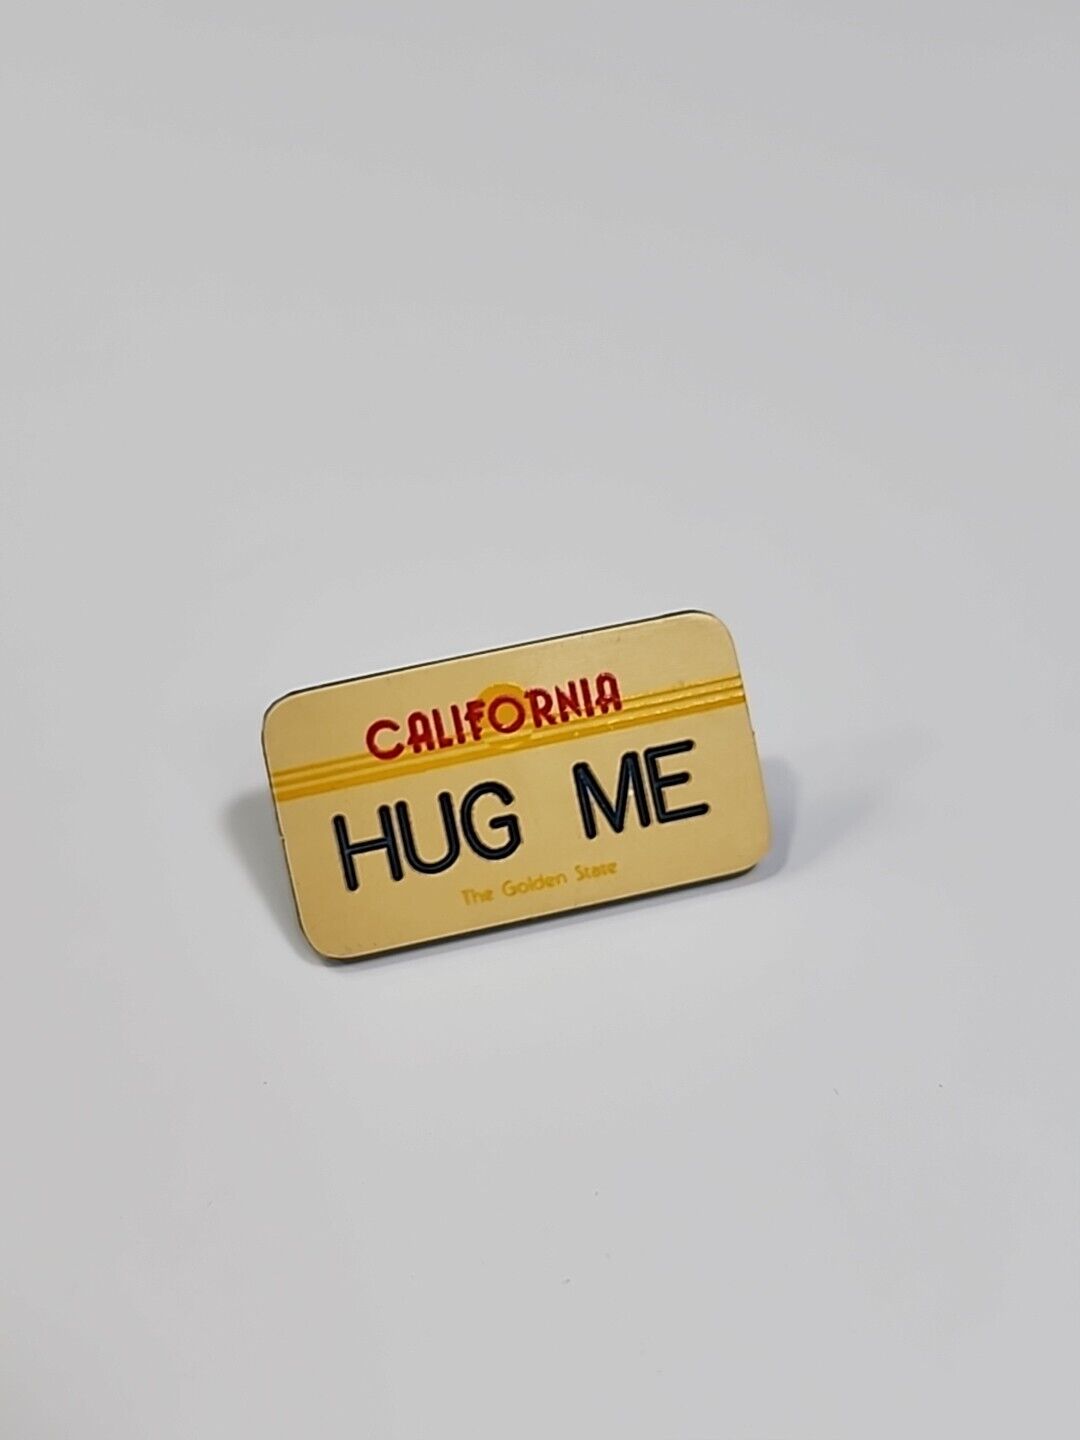 PLASTIC California Hug Me License Plate Souvenir Lapel Pin